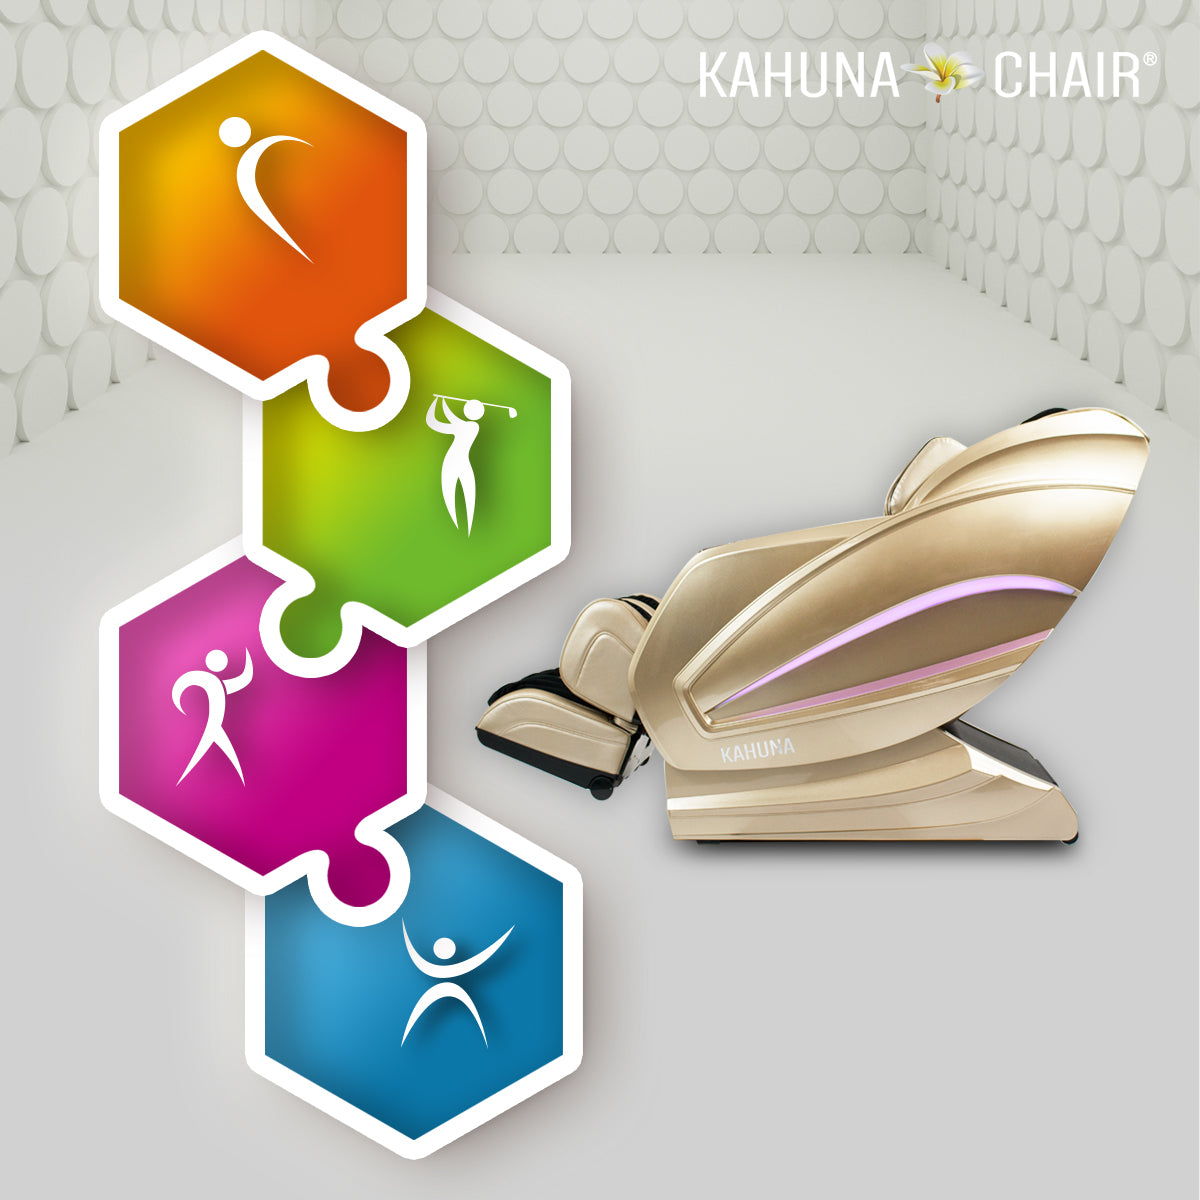 [OPEN BOX, A] 4D Exquisite Rhythmic HSL-Track Kahuna Massage Chair, HM-Kappa Gold